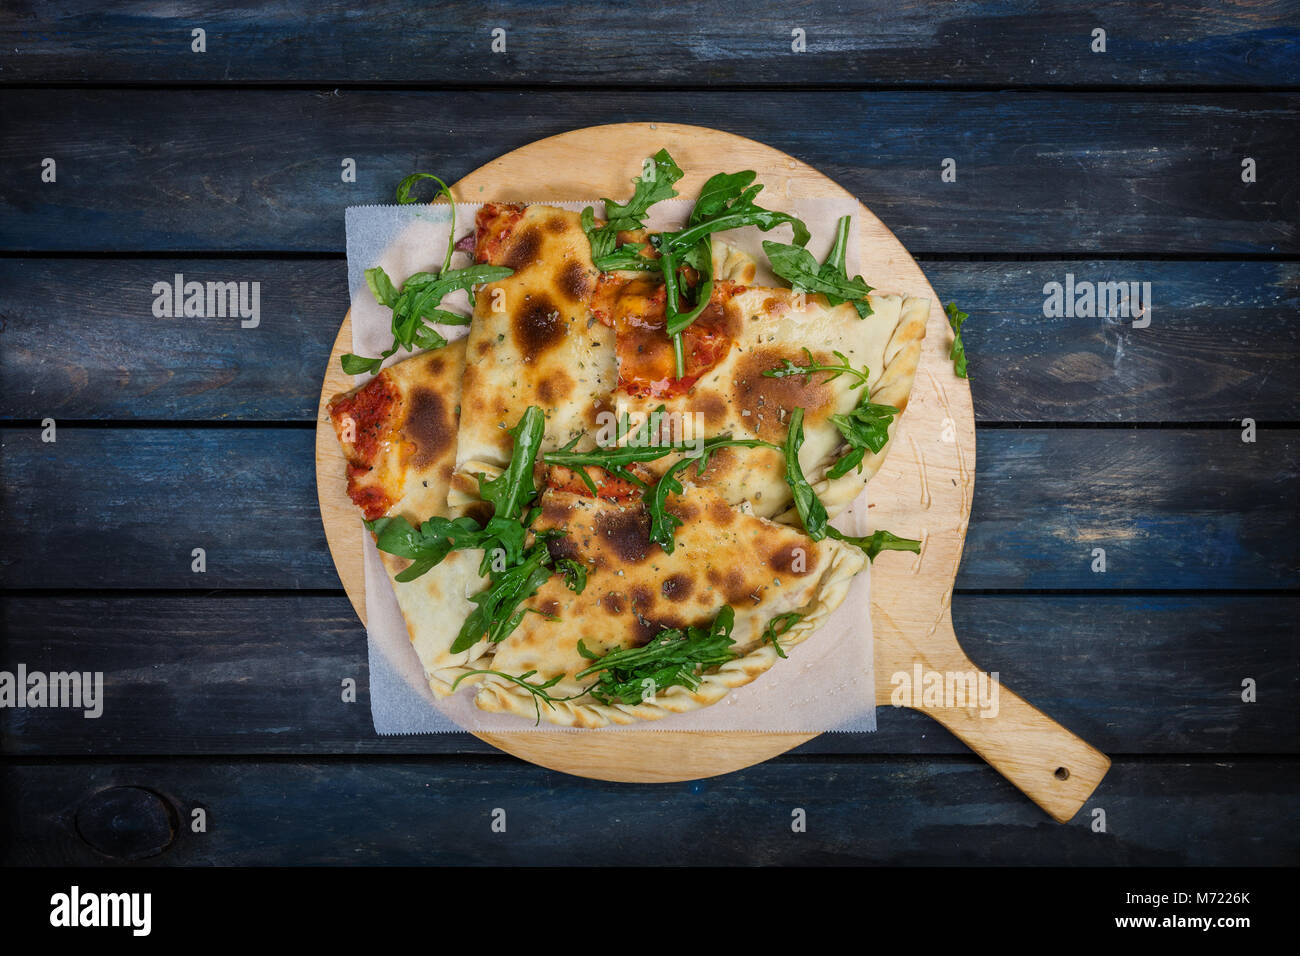 Calzone - Stuffed Pizza with ham, mushrooms, arugula and cheese. Stock Photo